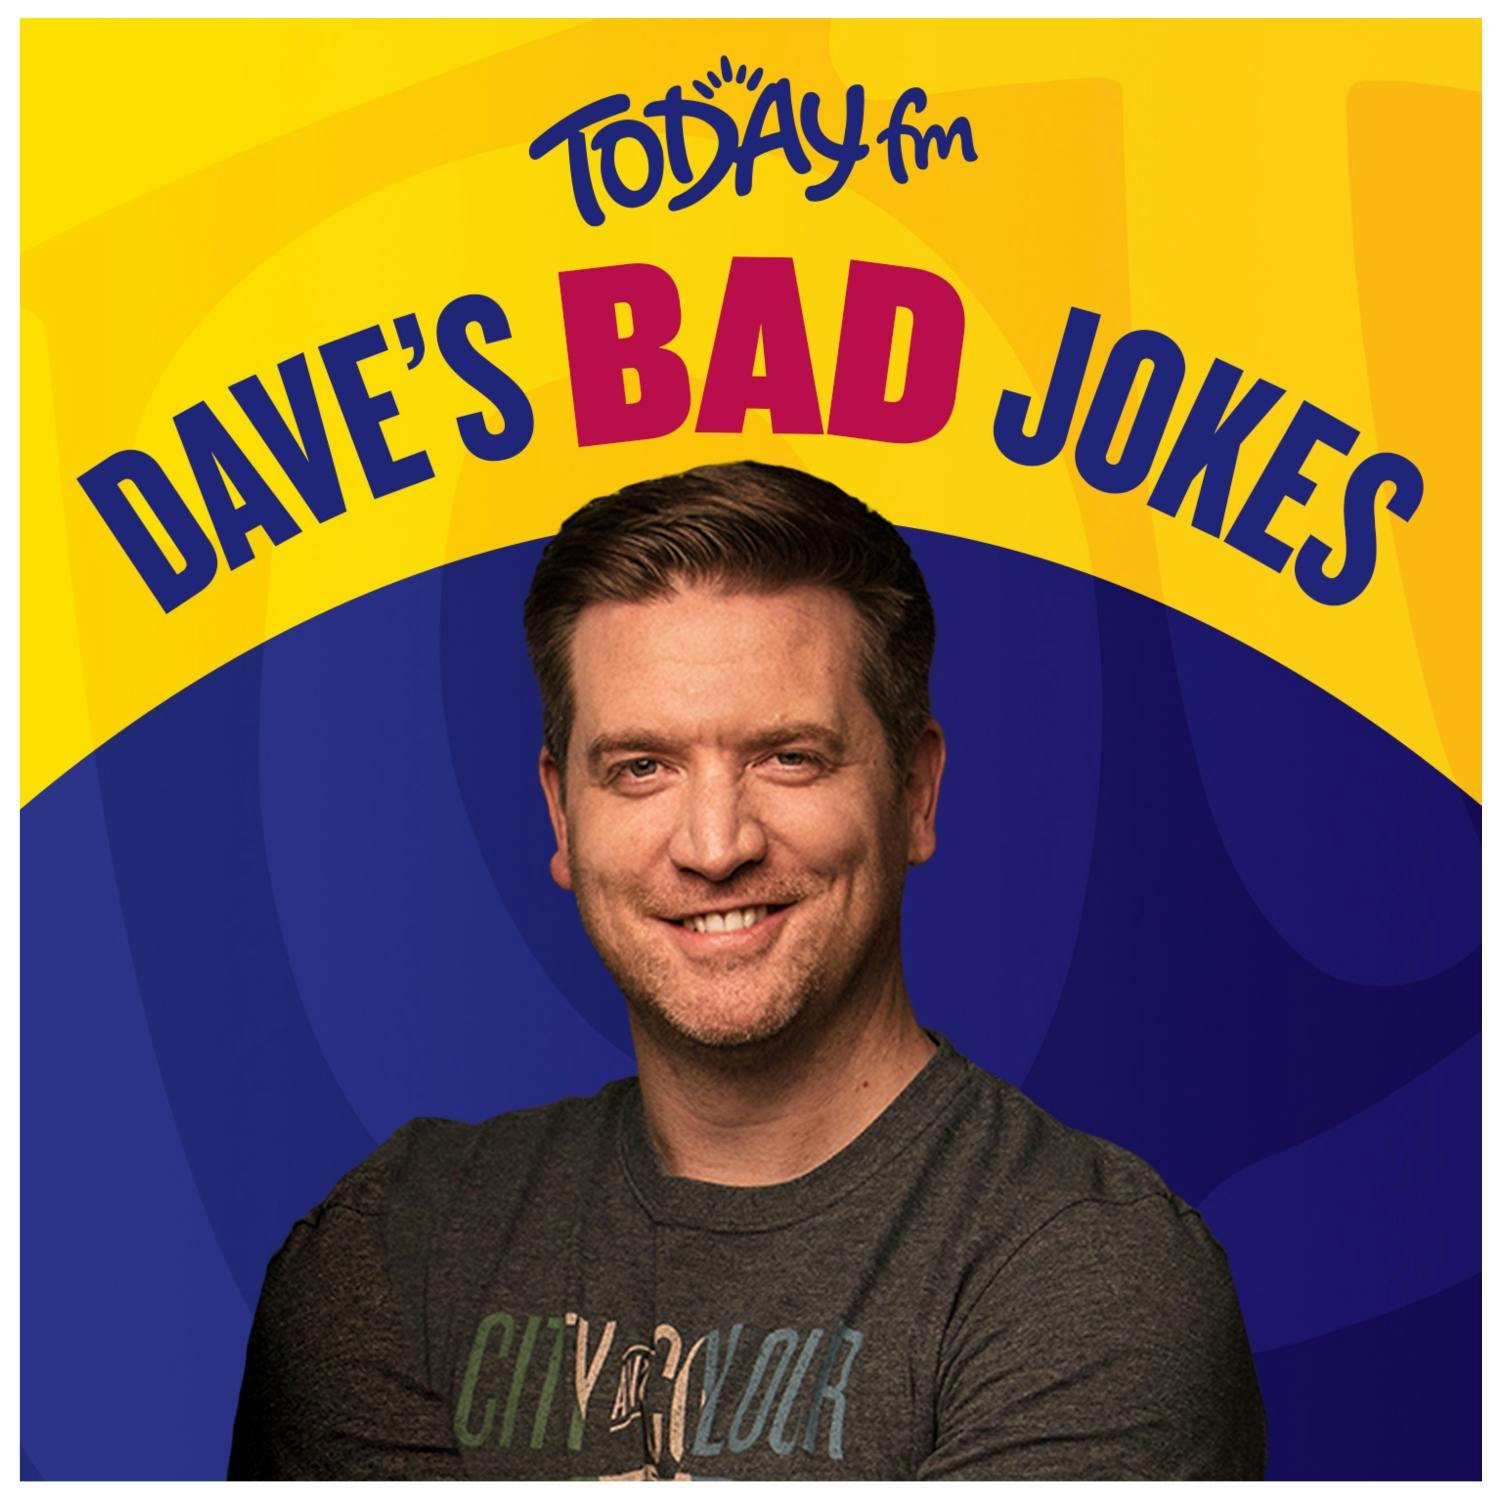 Dave's Bad Jokes